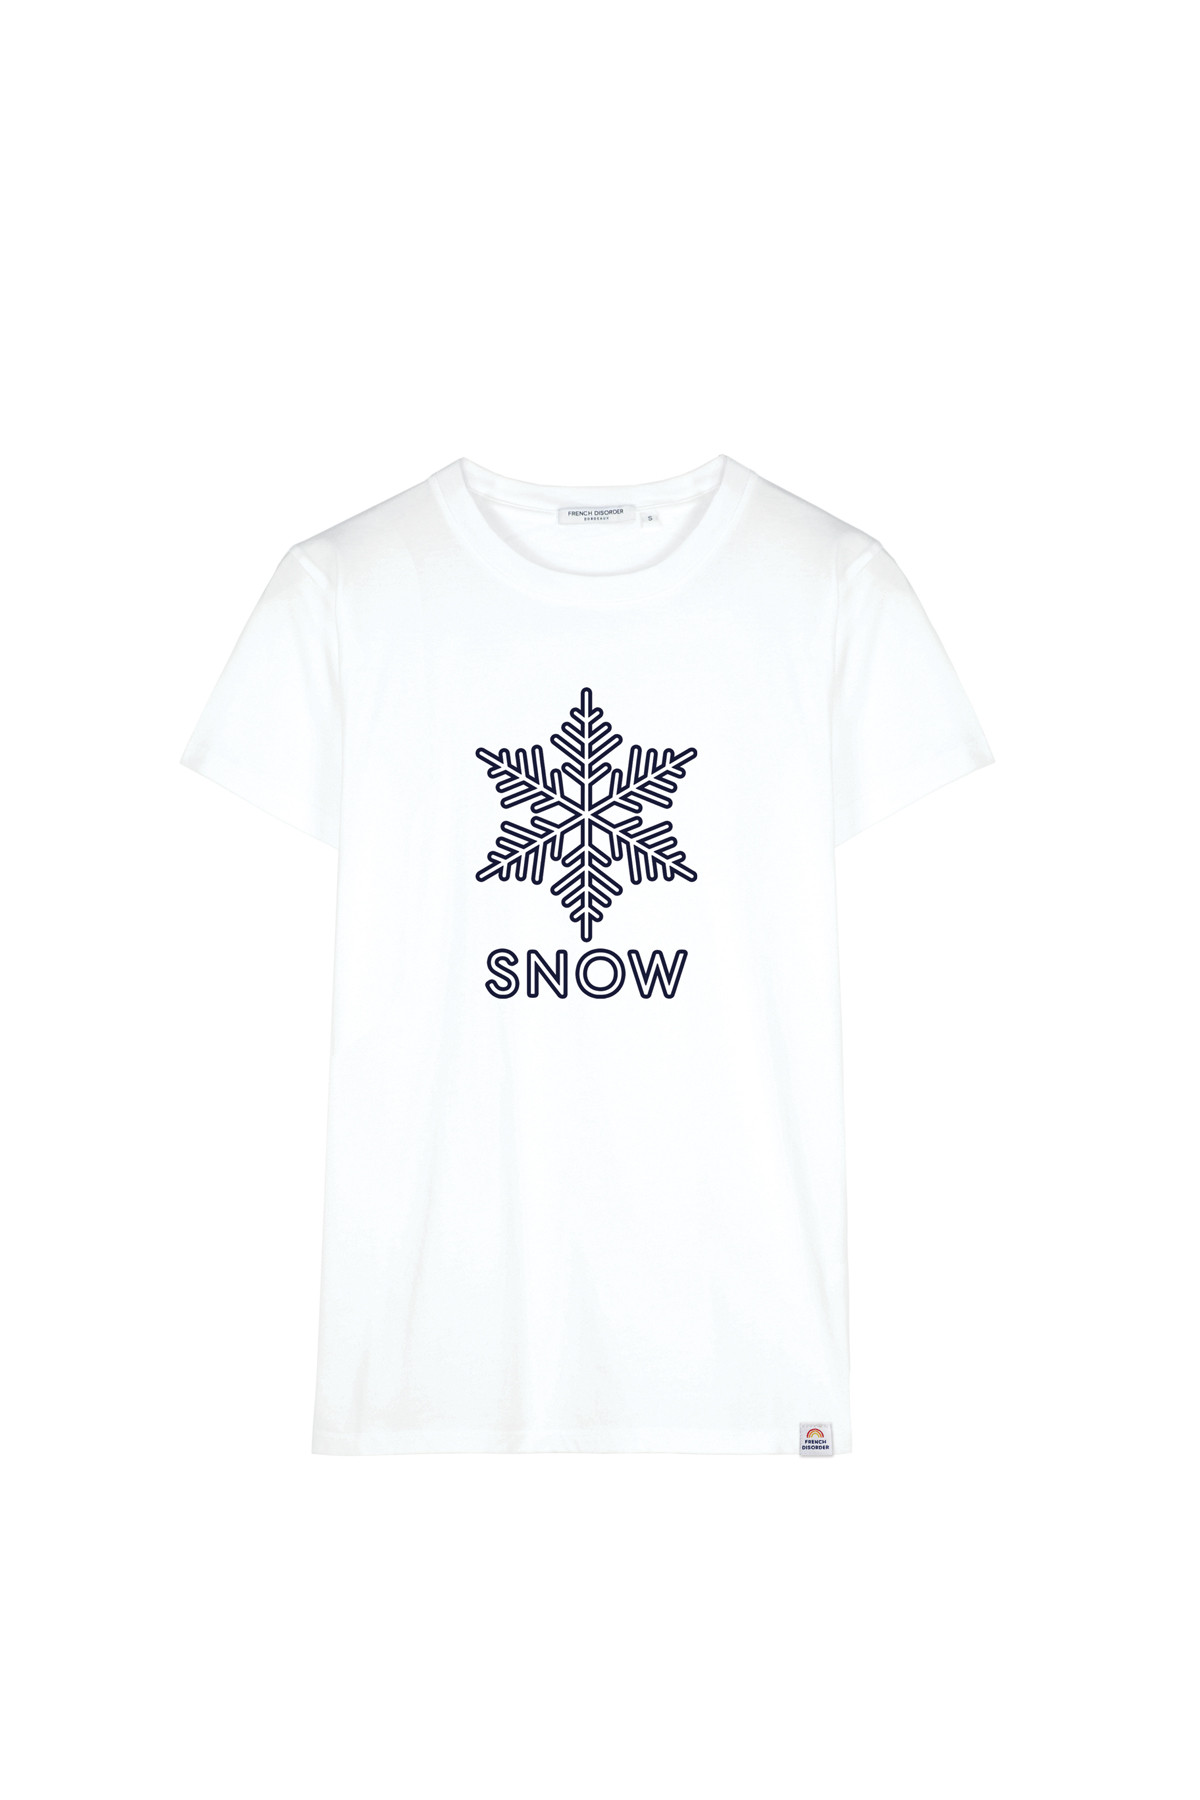 Photo de T-SHIRTS COL ROND Tshirt SNOW chez French Disorder